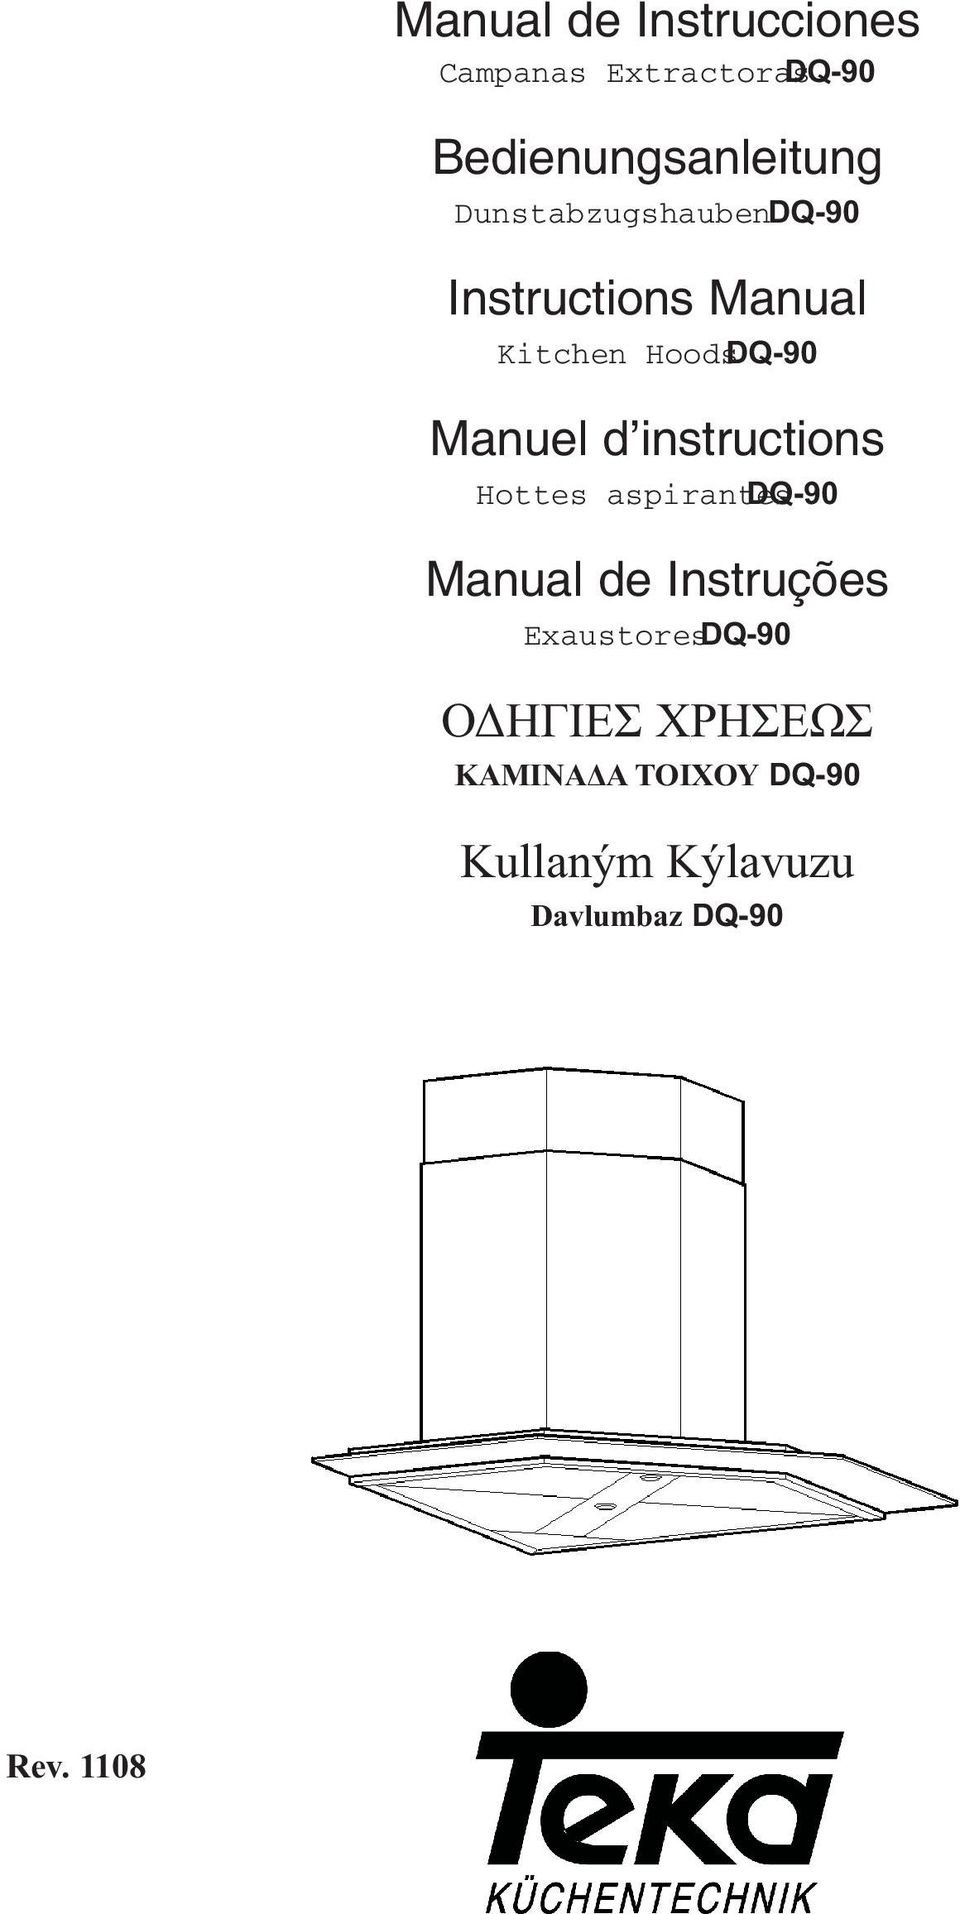 instructions Hottes aspirantes DQ-90 Manual de Instruções Exaustores DQ-90